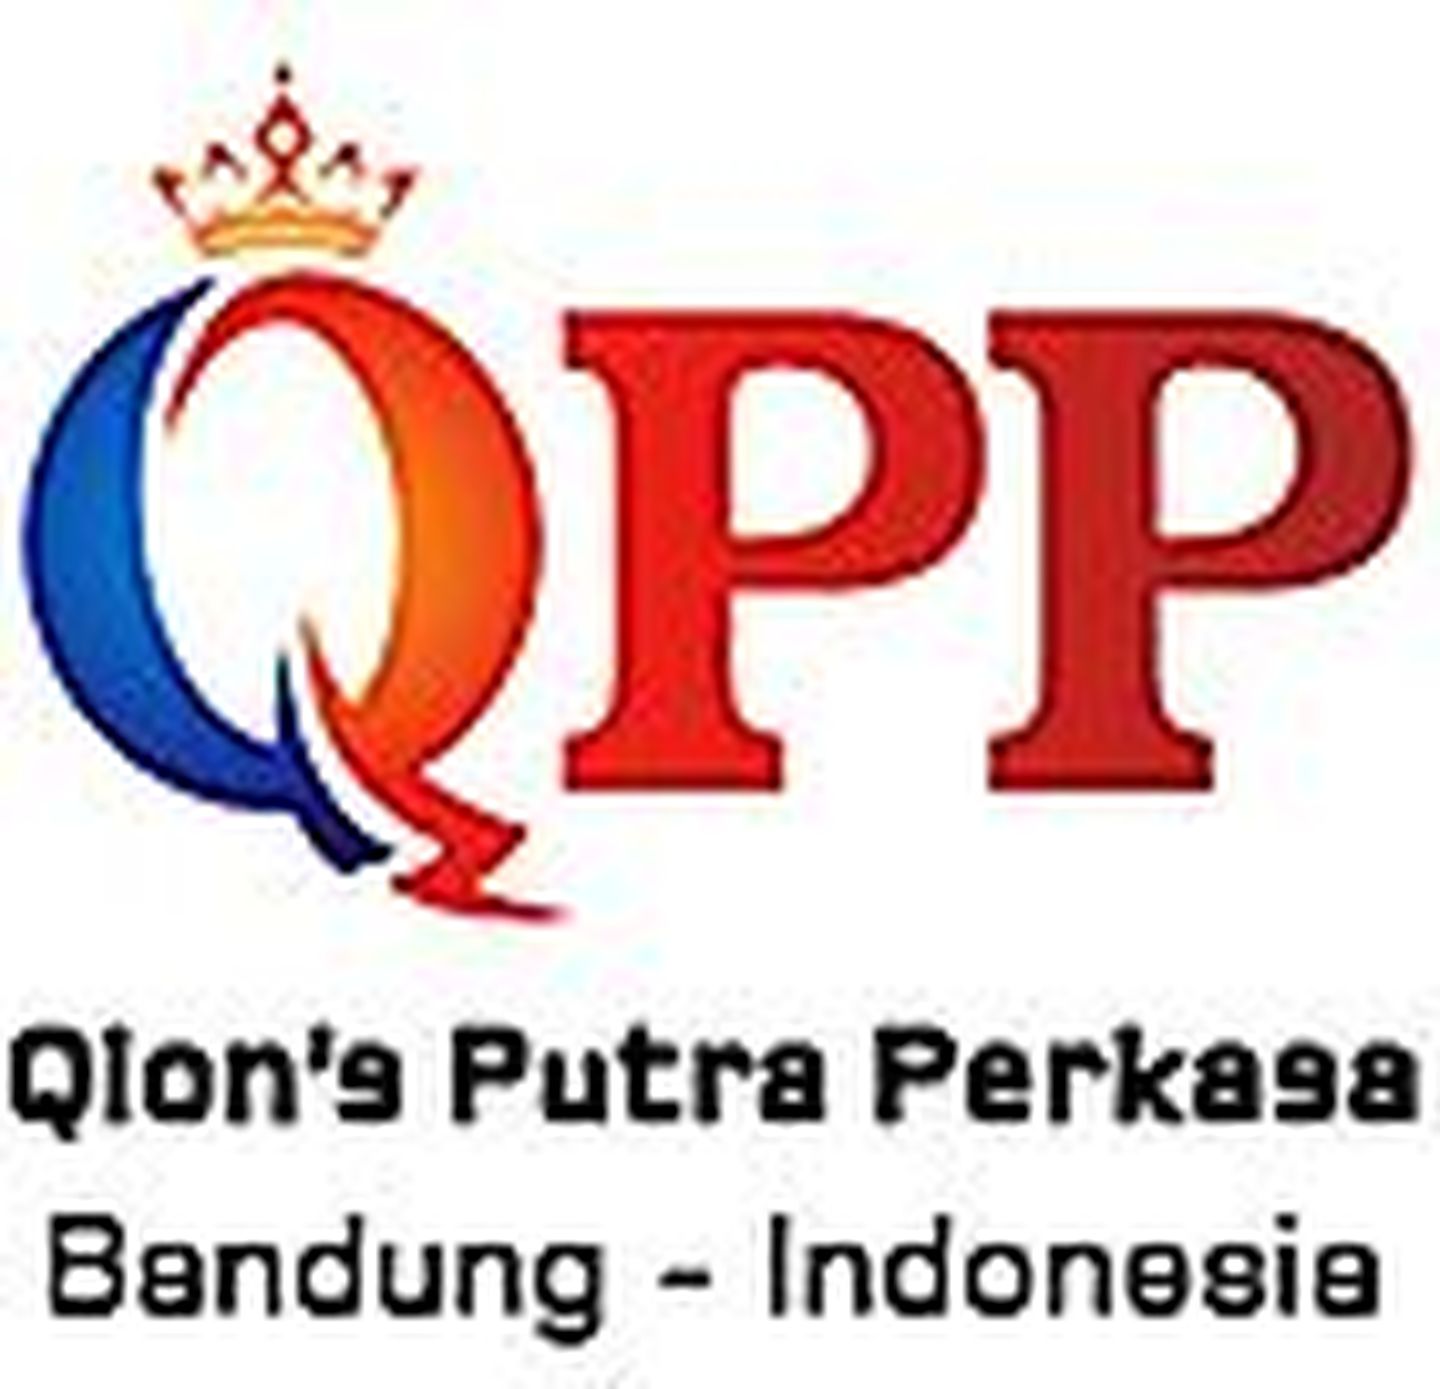 Cv Qion's Putra Perkasa is hiring a Staff Administrasi in Pamanukan, Indonesia!